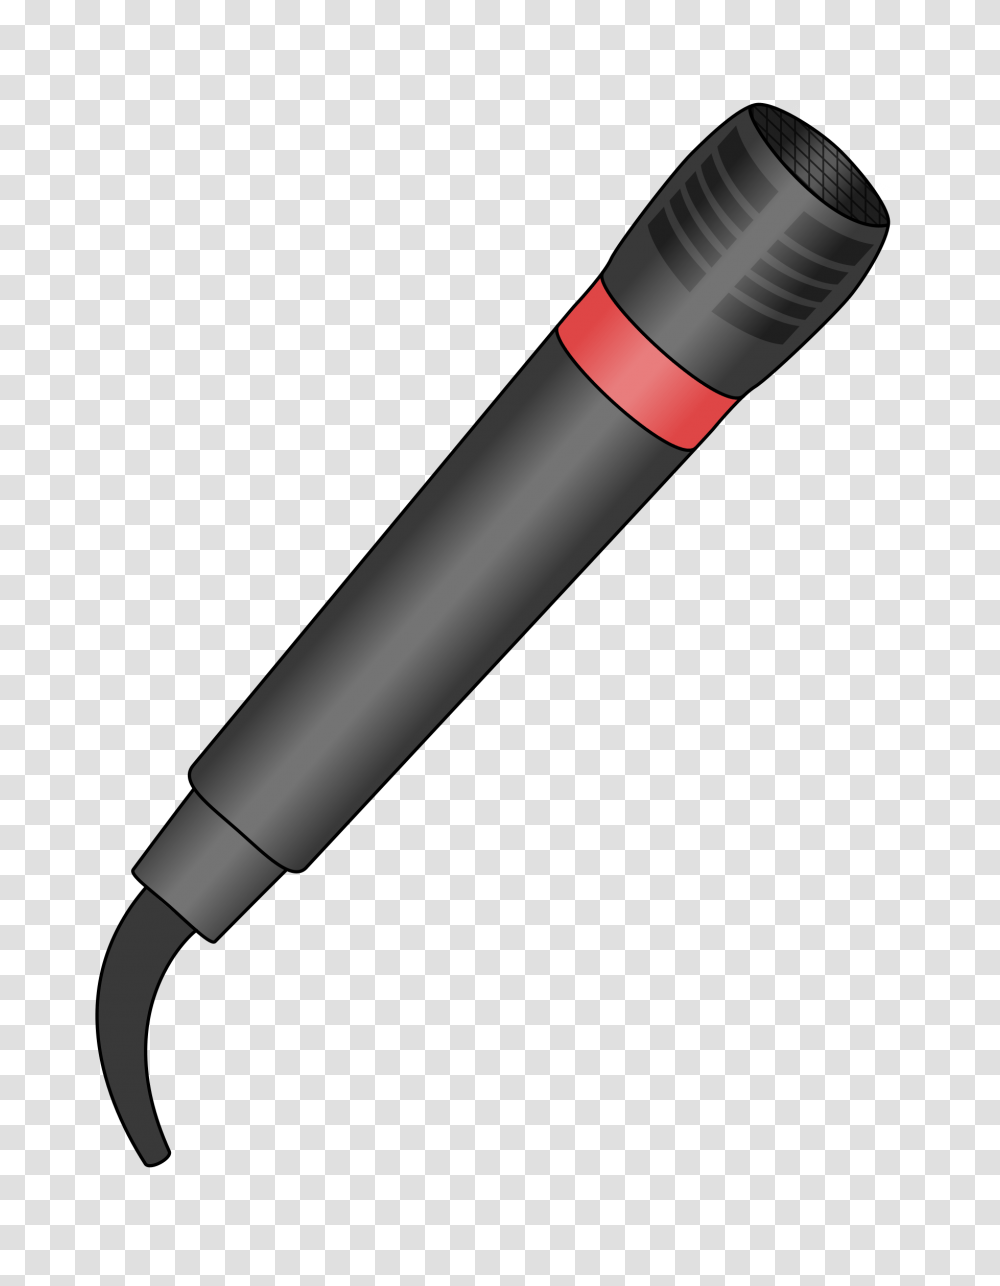 Podcast Clipart Microphone Stick - Gclipartcom Microphone Clip Art, Pen, Light, Electrical Device Transparent Png